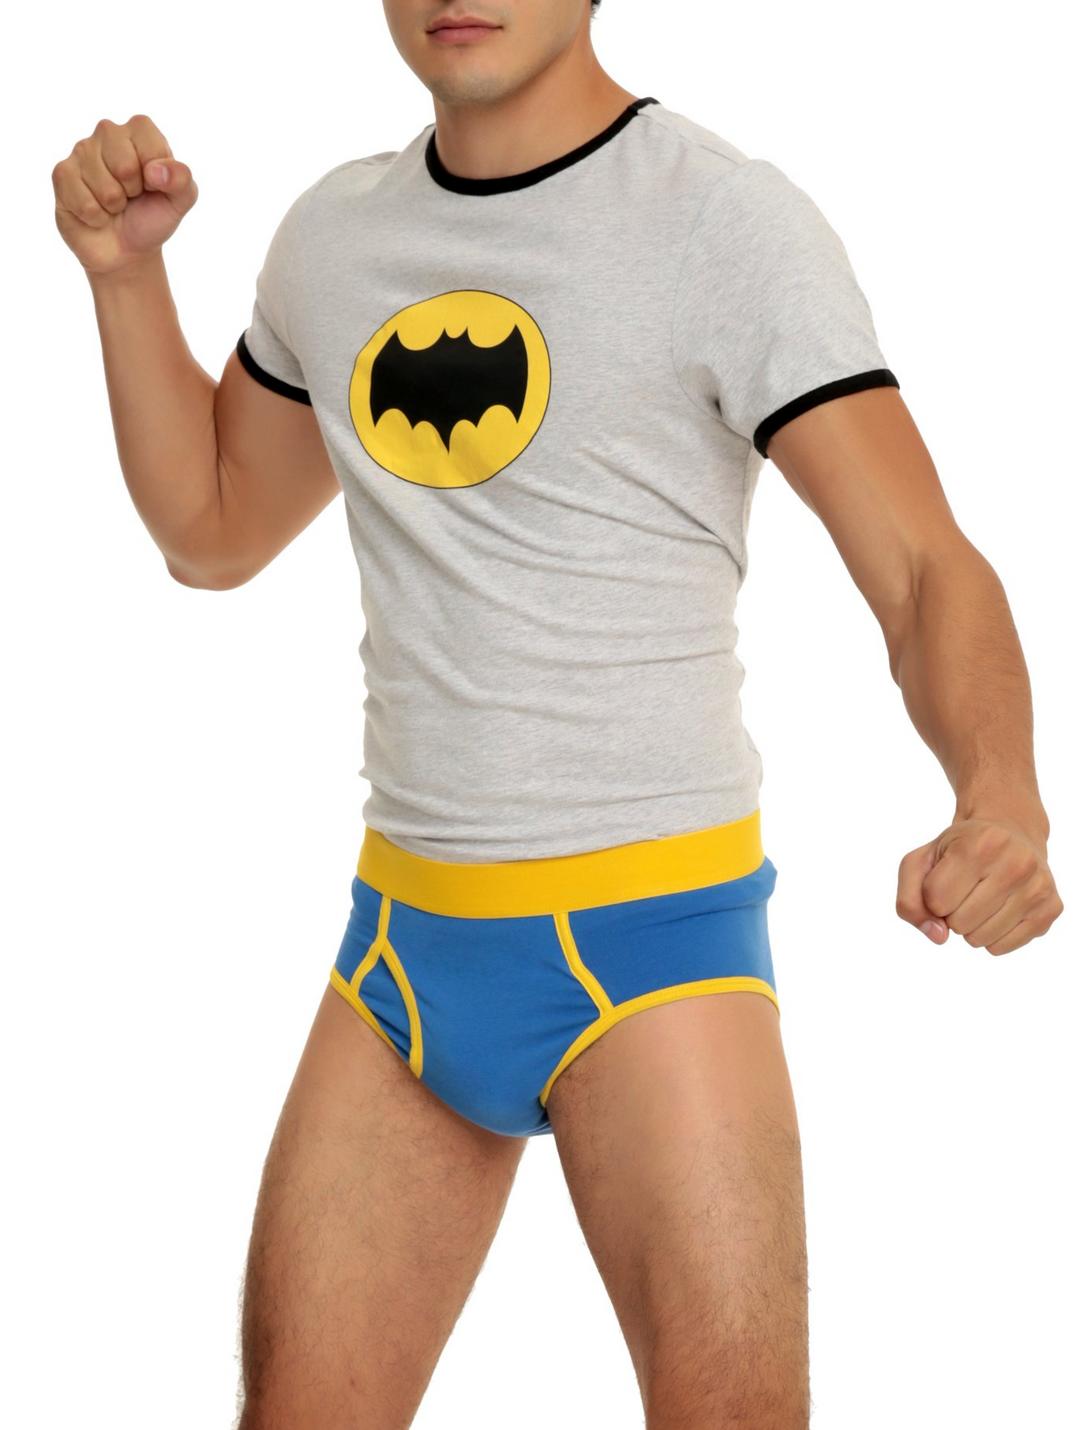 Underoos DC Comics Batman Guys Underwear Set, BLACK, hi-res